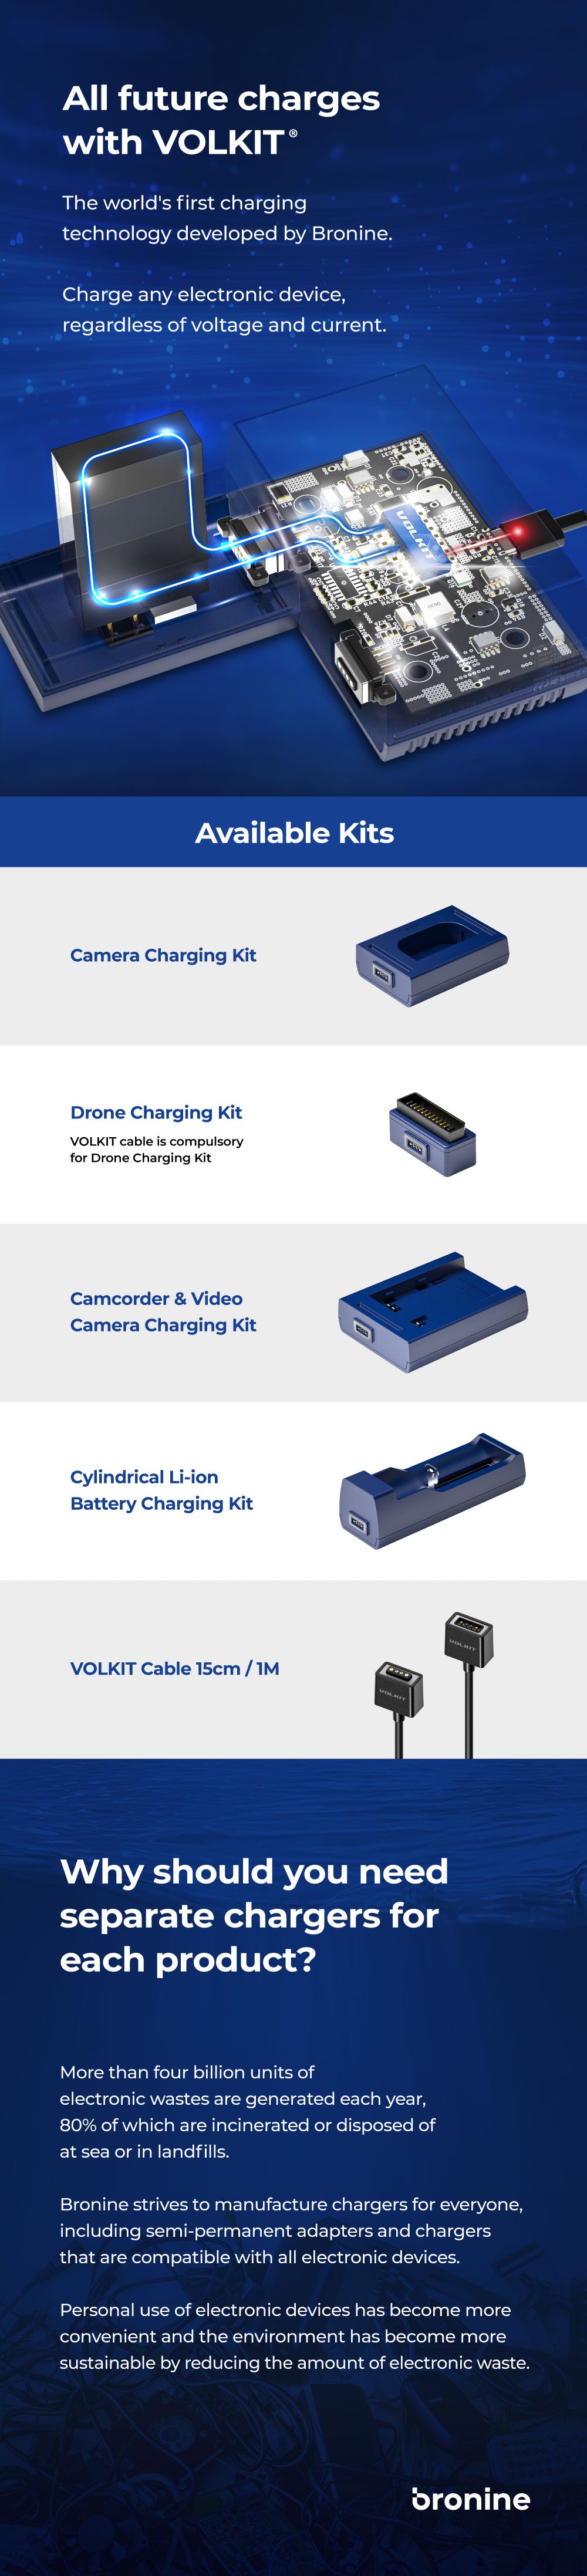 bronine Sony NP-FZ100 Camera Battery Charging Kit